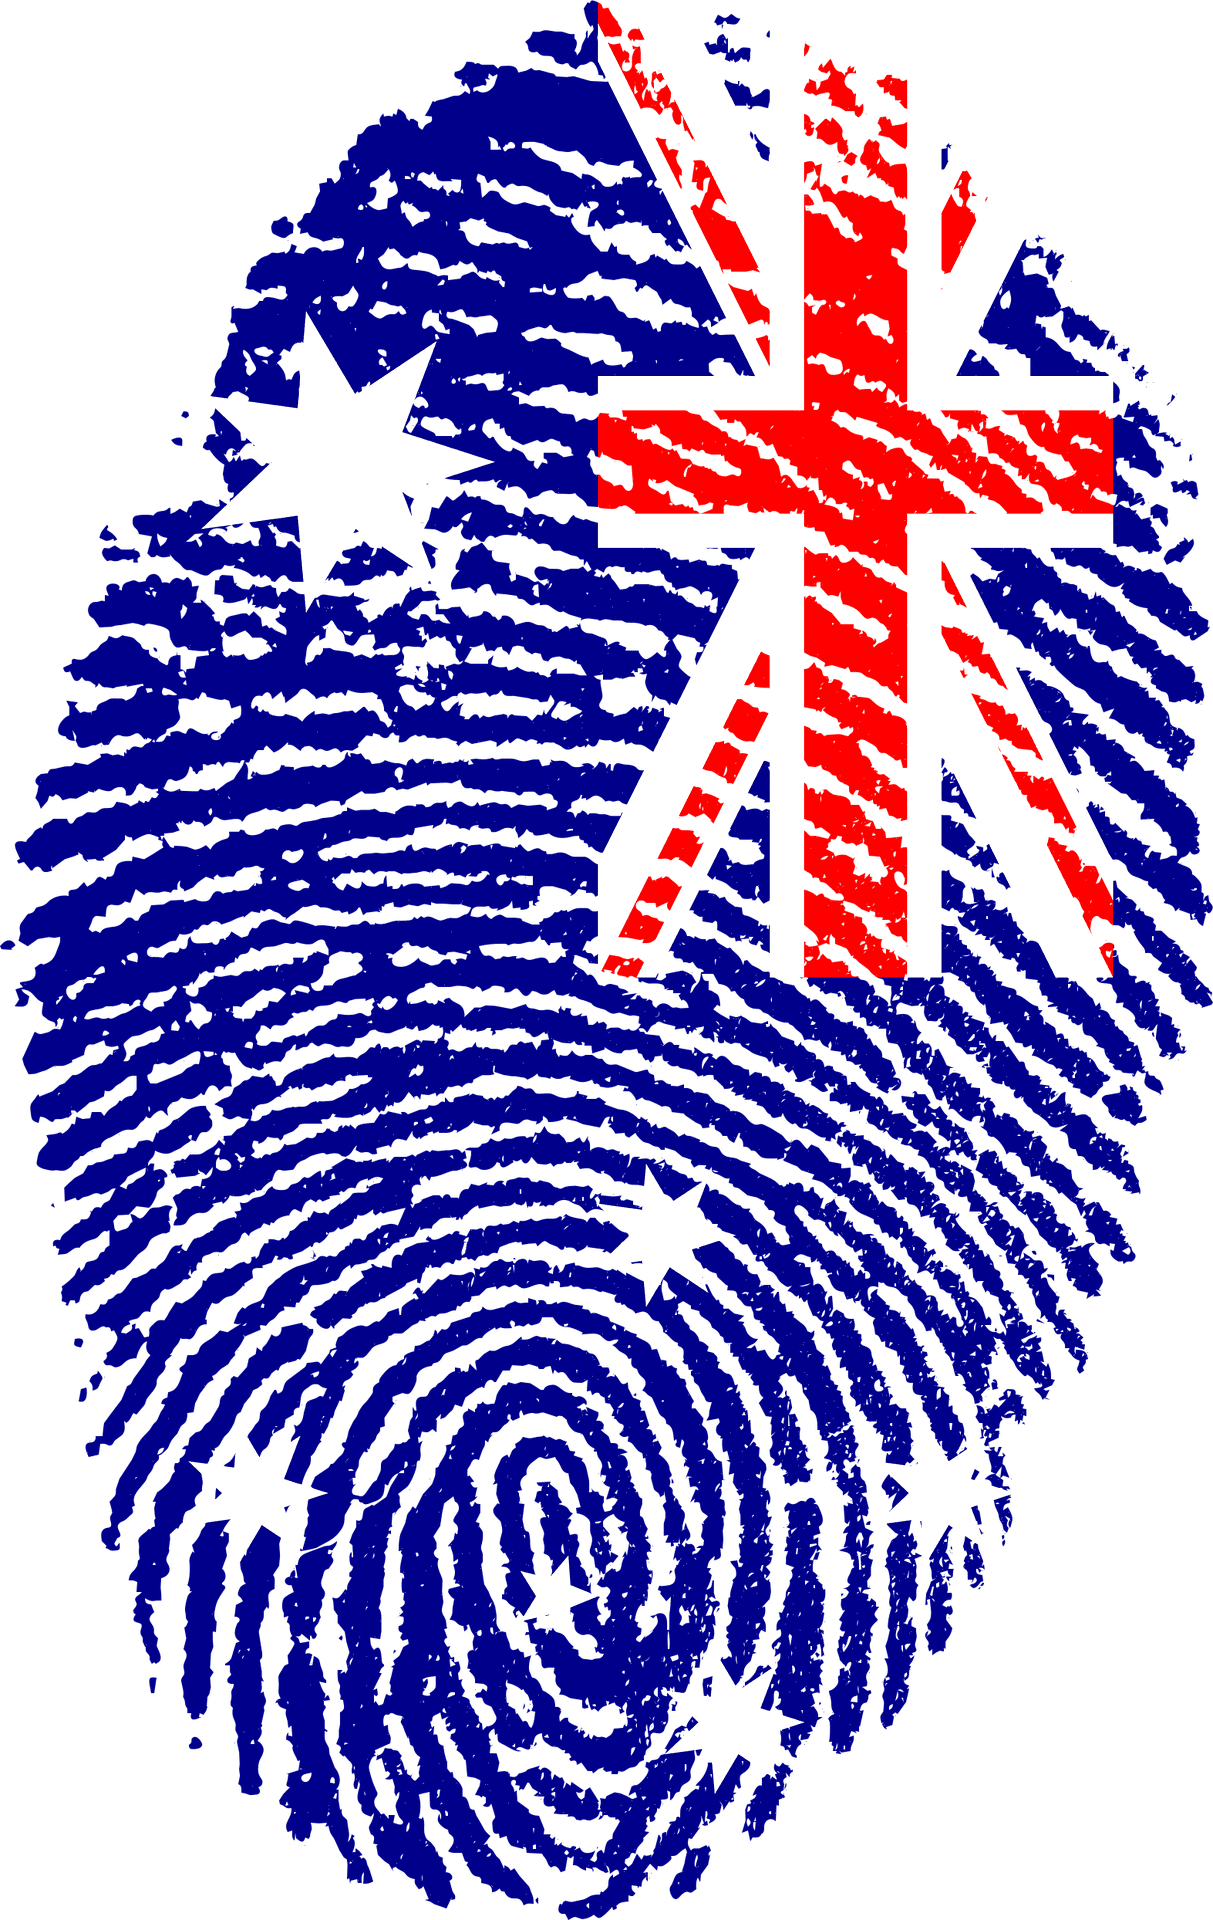 student visa in australia